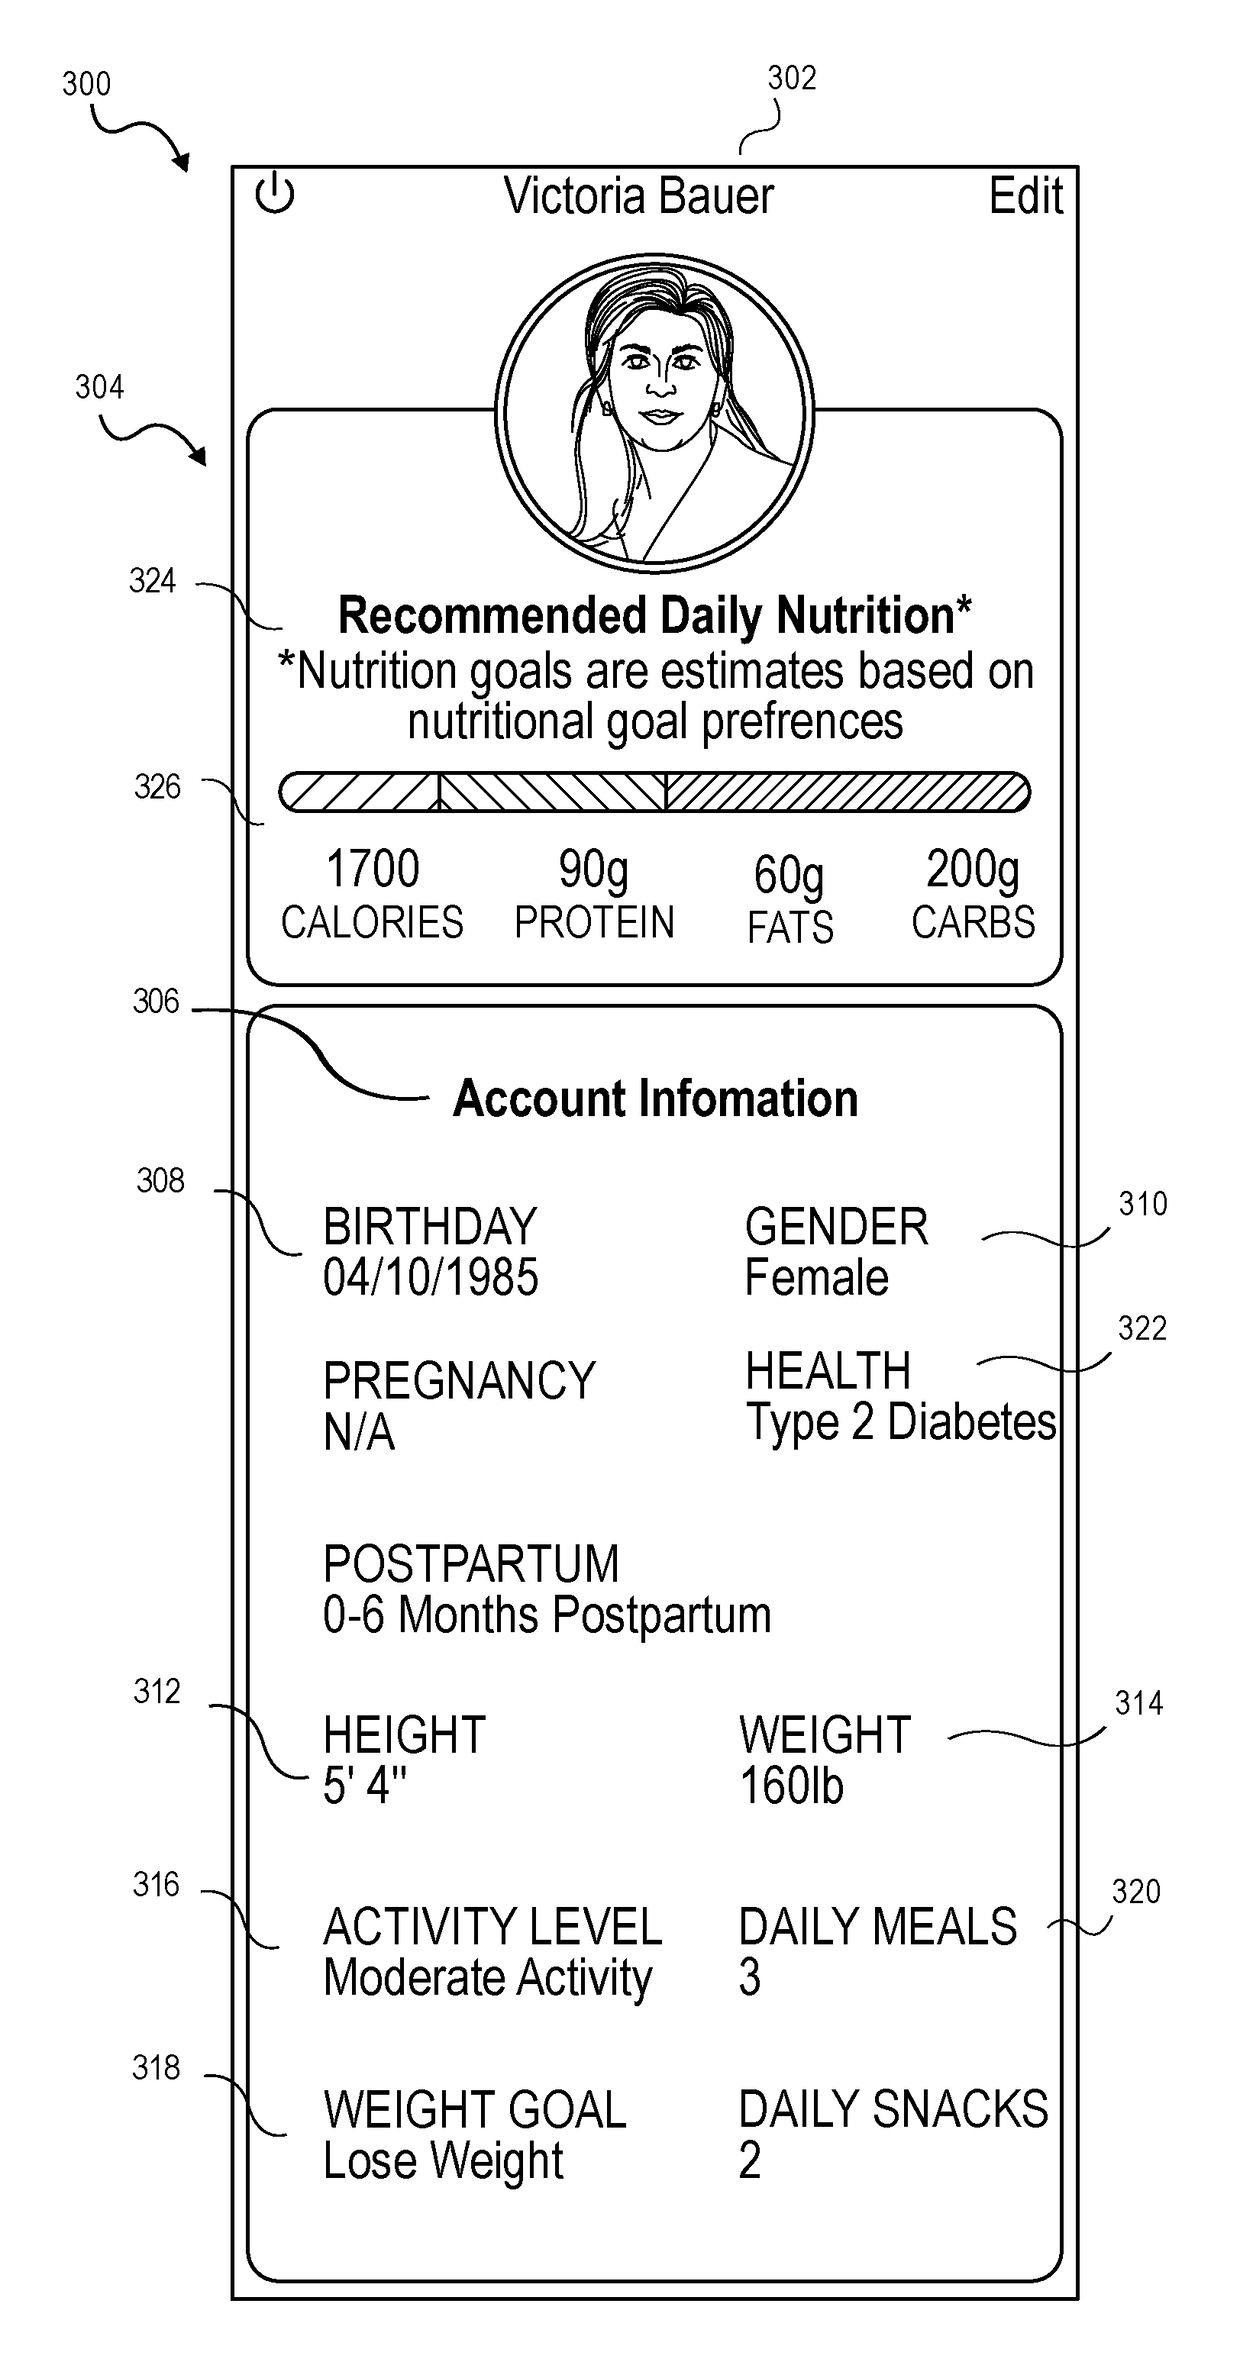 Nutrition scoring system